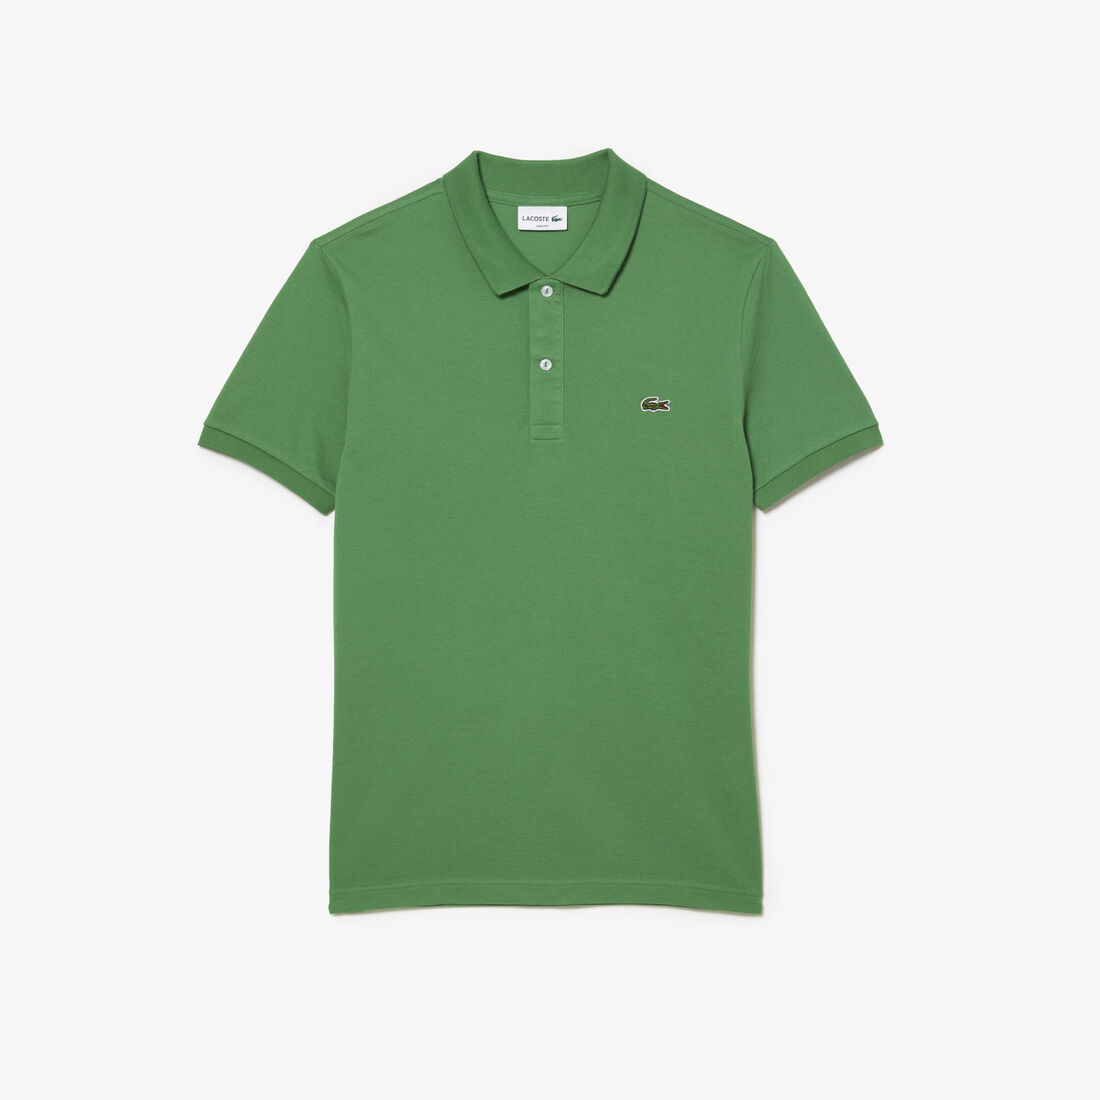 Lacoste Slim Fit In Petit Piqué Polo Shirts Herren Grün | UKST-72105